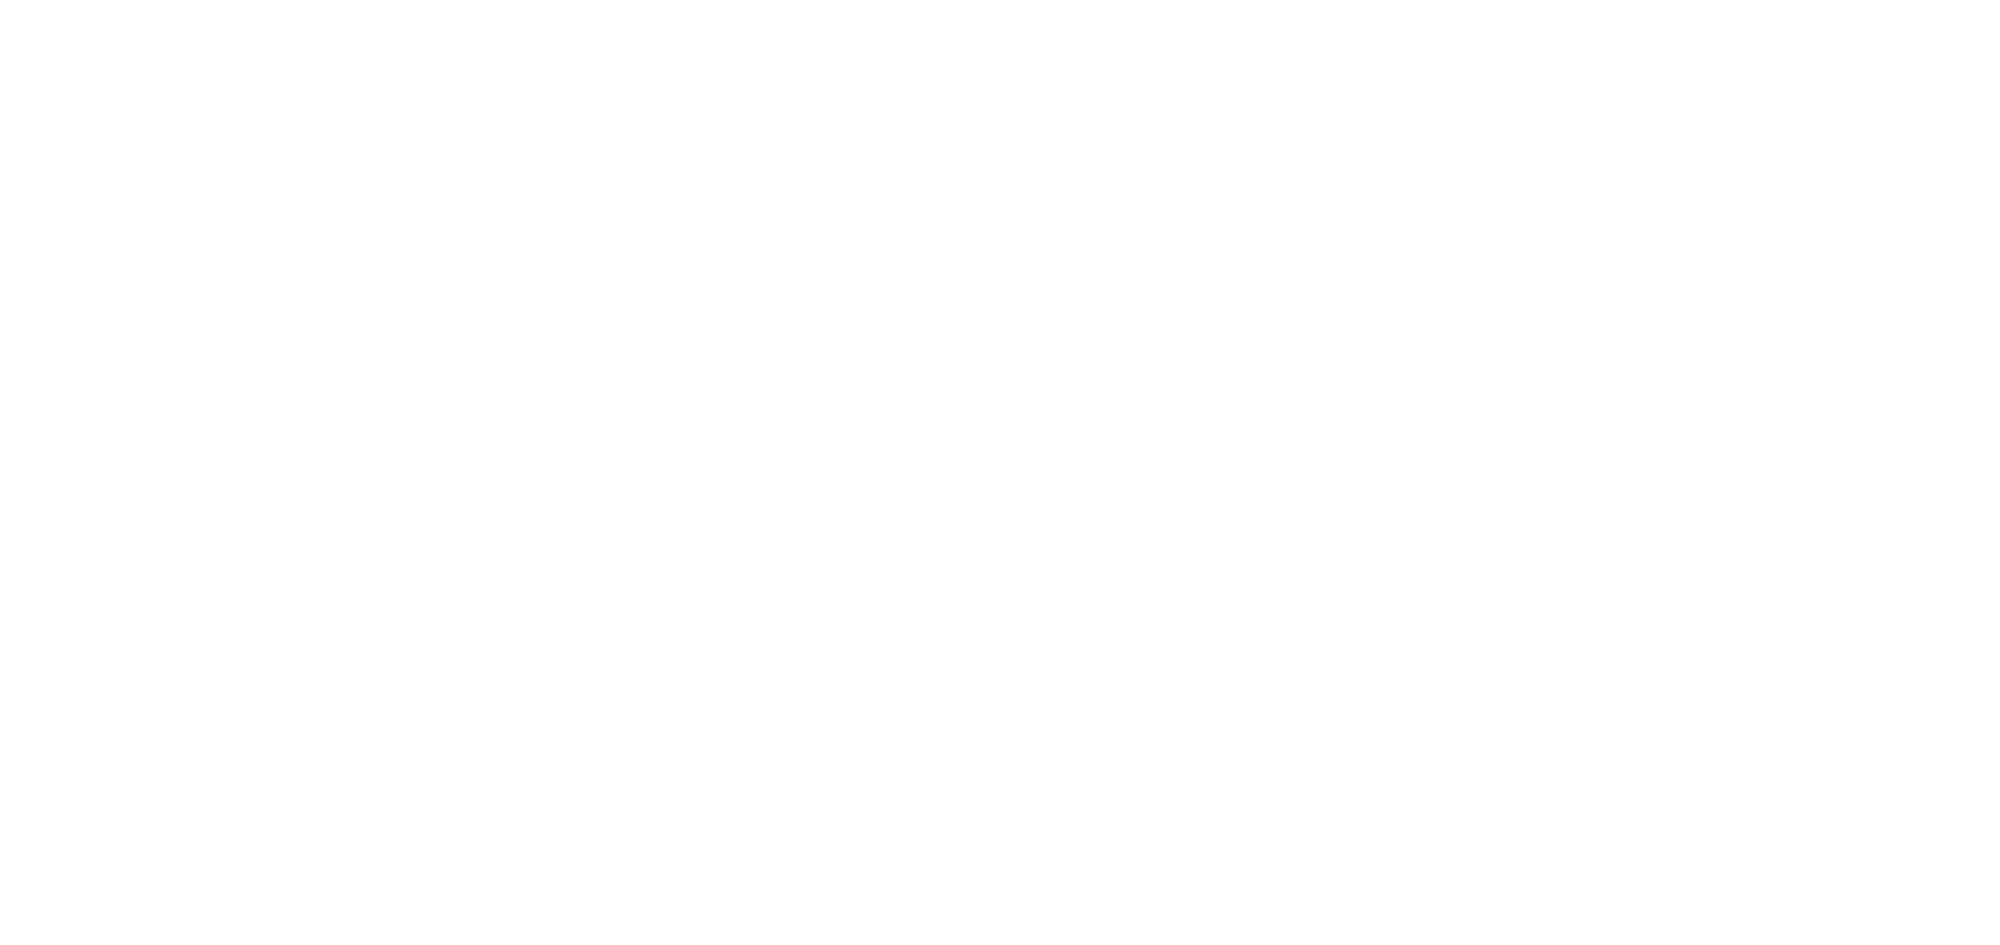 Mercure Welcome Melbourne Logo